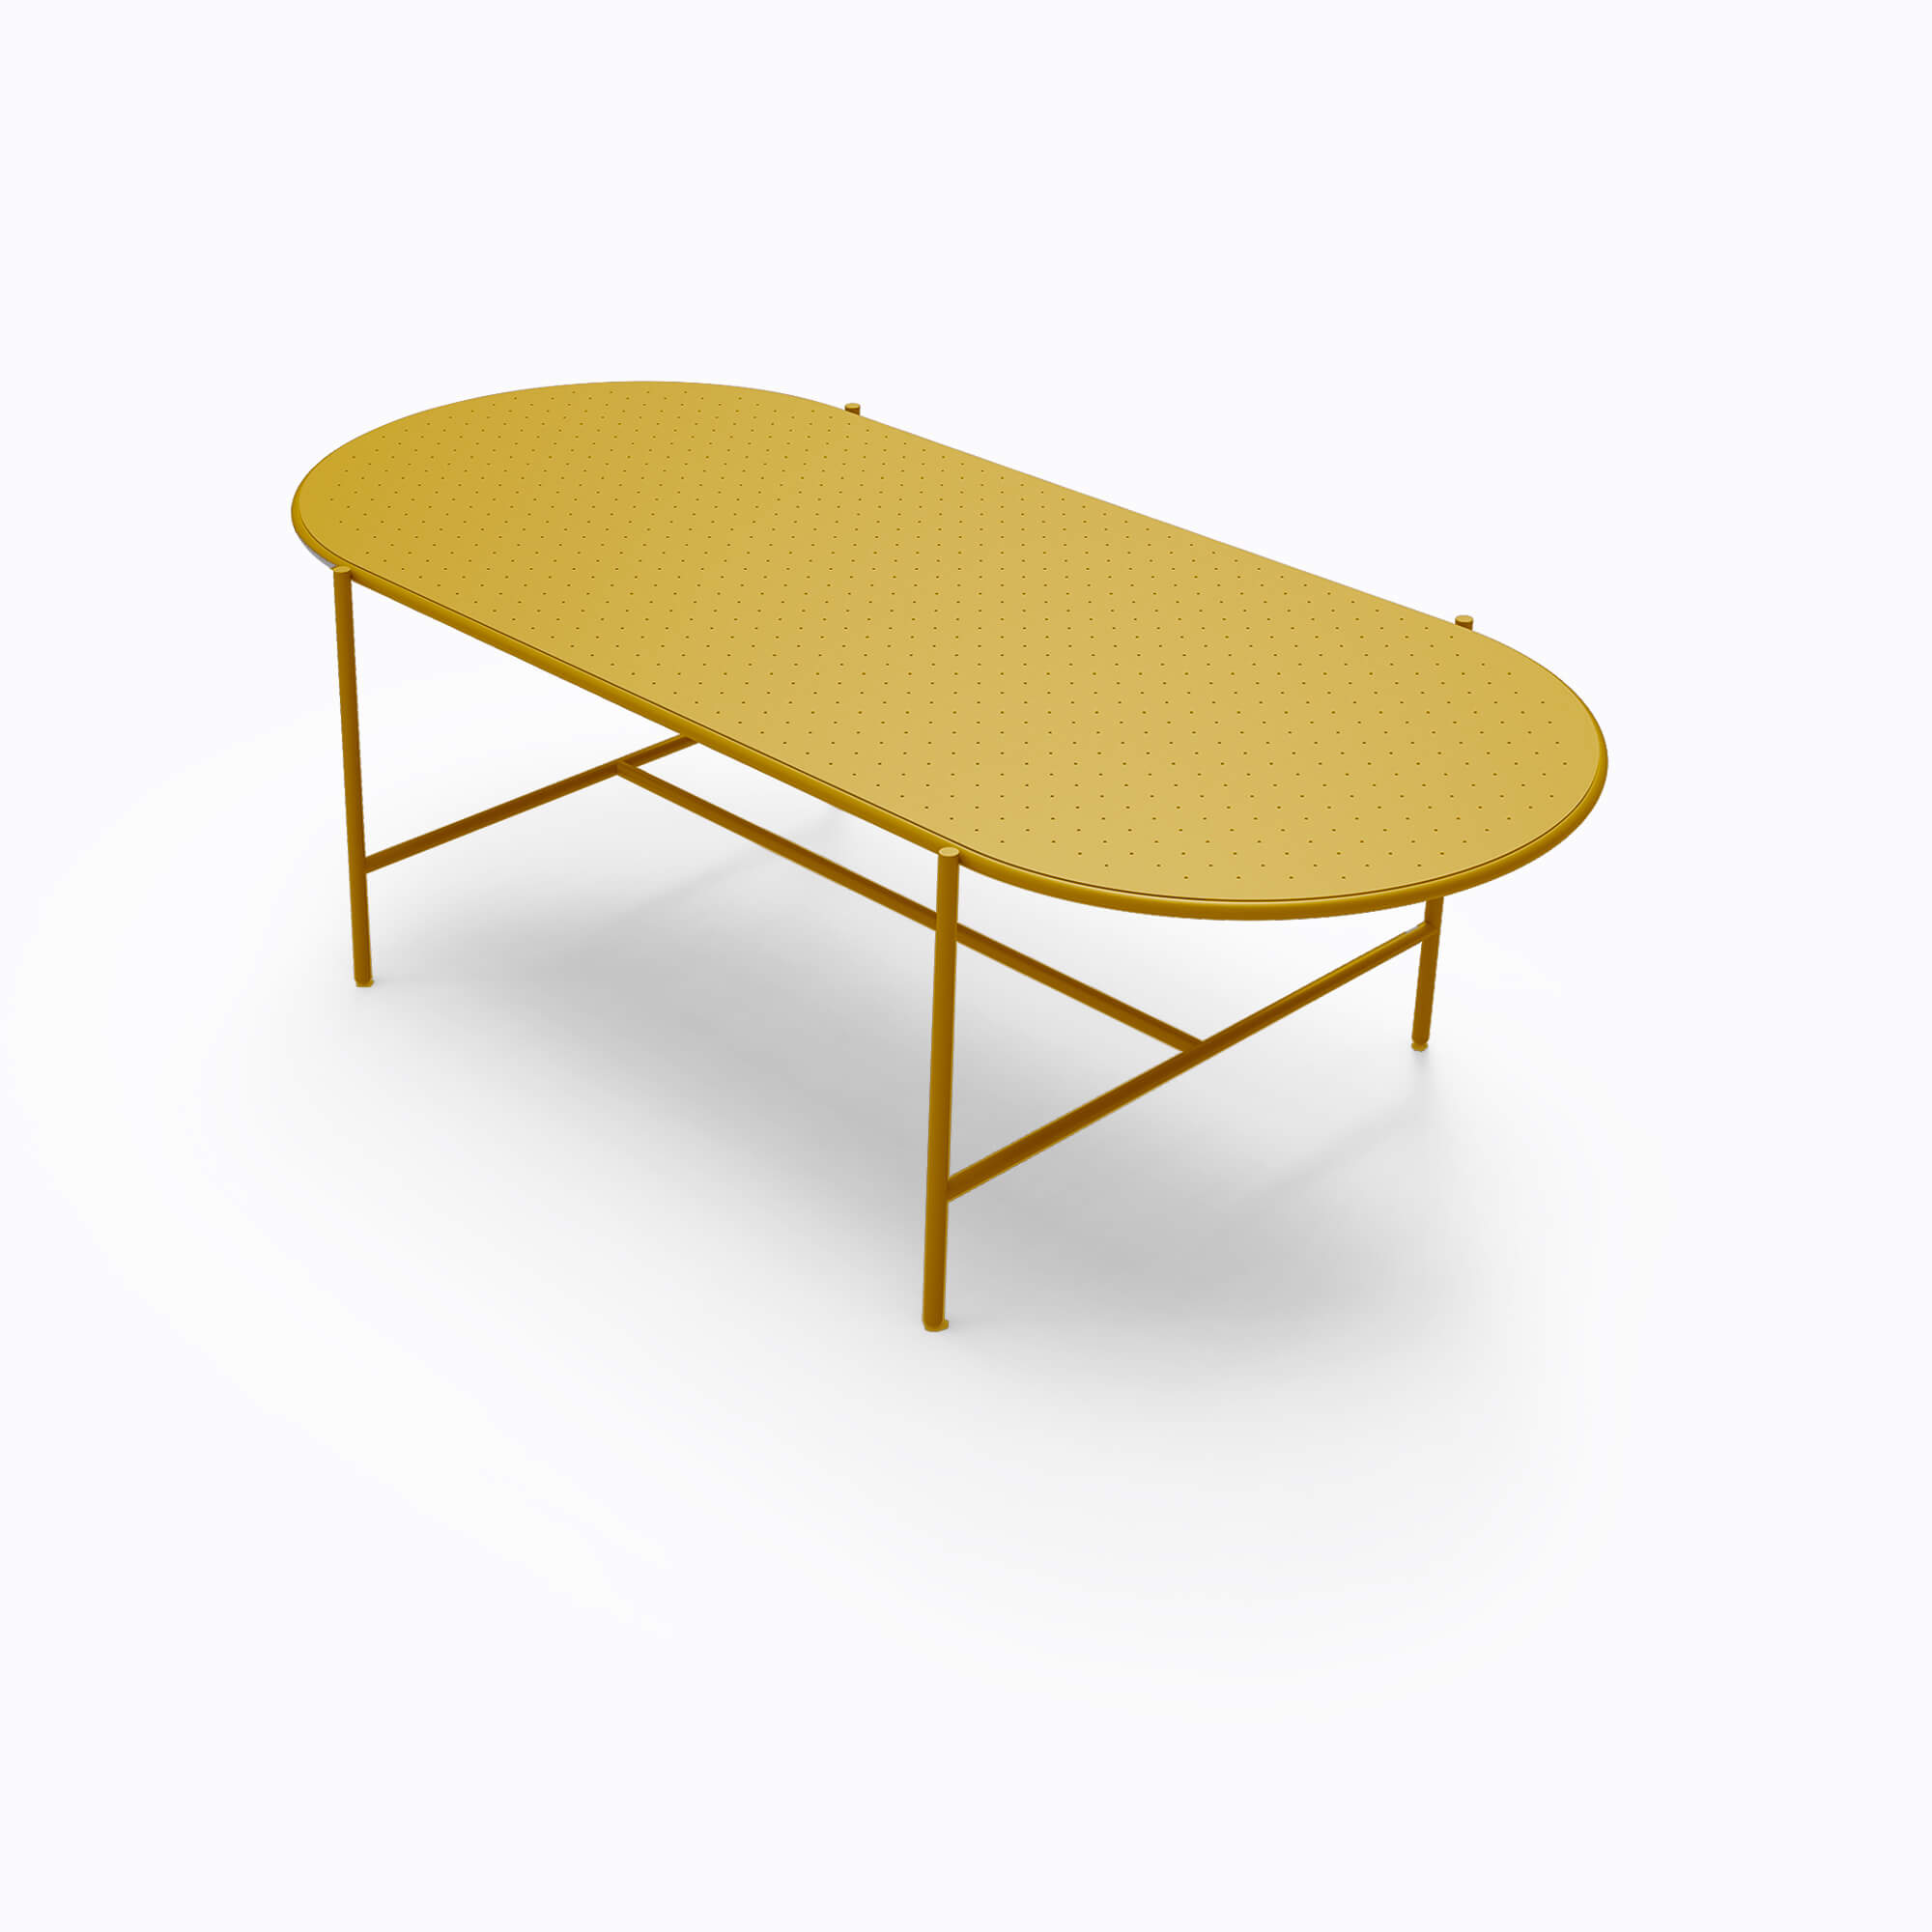 OUDOOR שולחן מתכת אלומיניום זעפרן צהוב צבעוני 4 מושבים